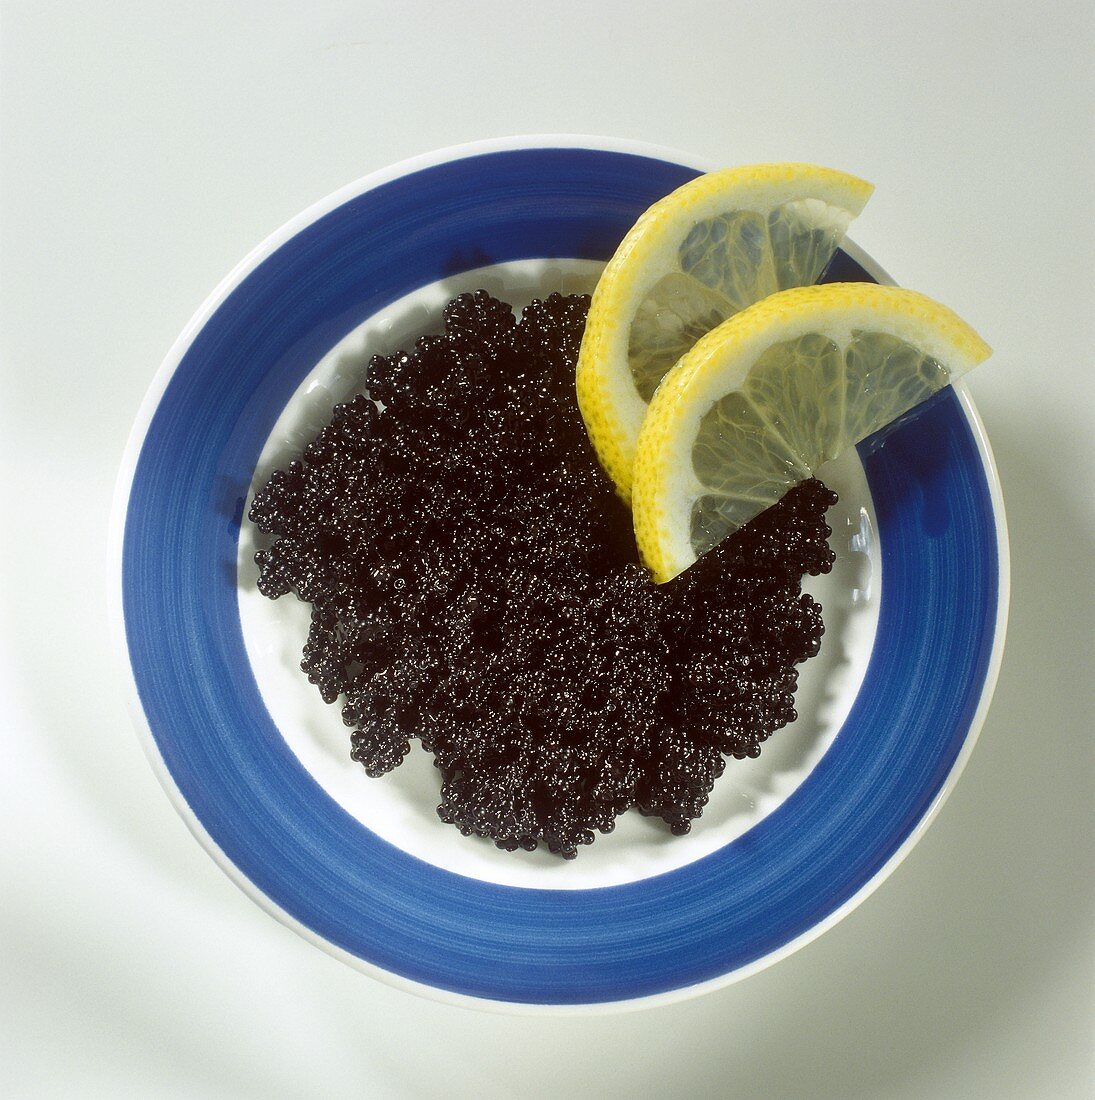 Black Caviar on a Plate with Lemon Slices